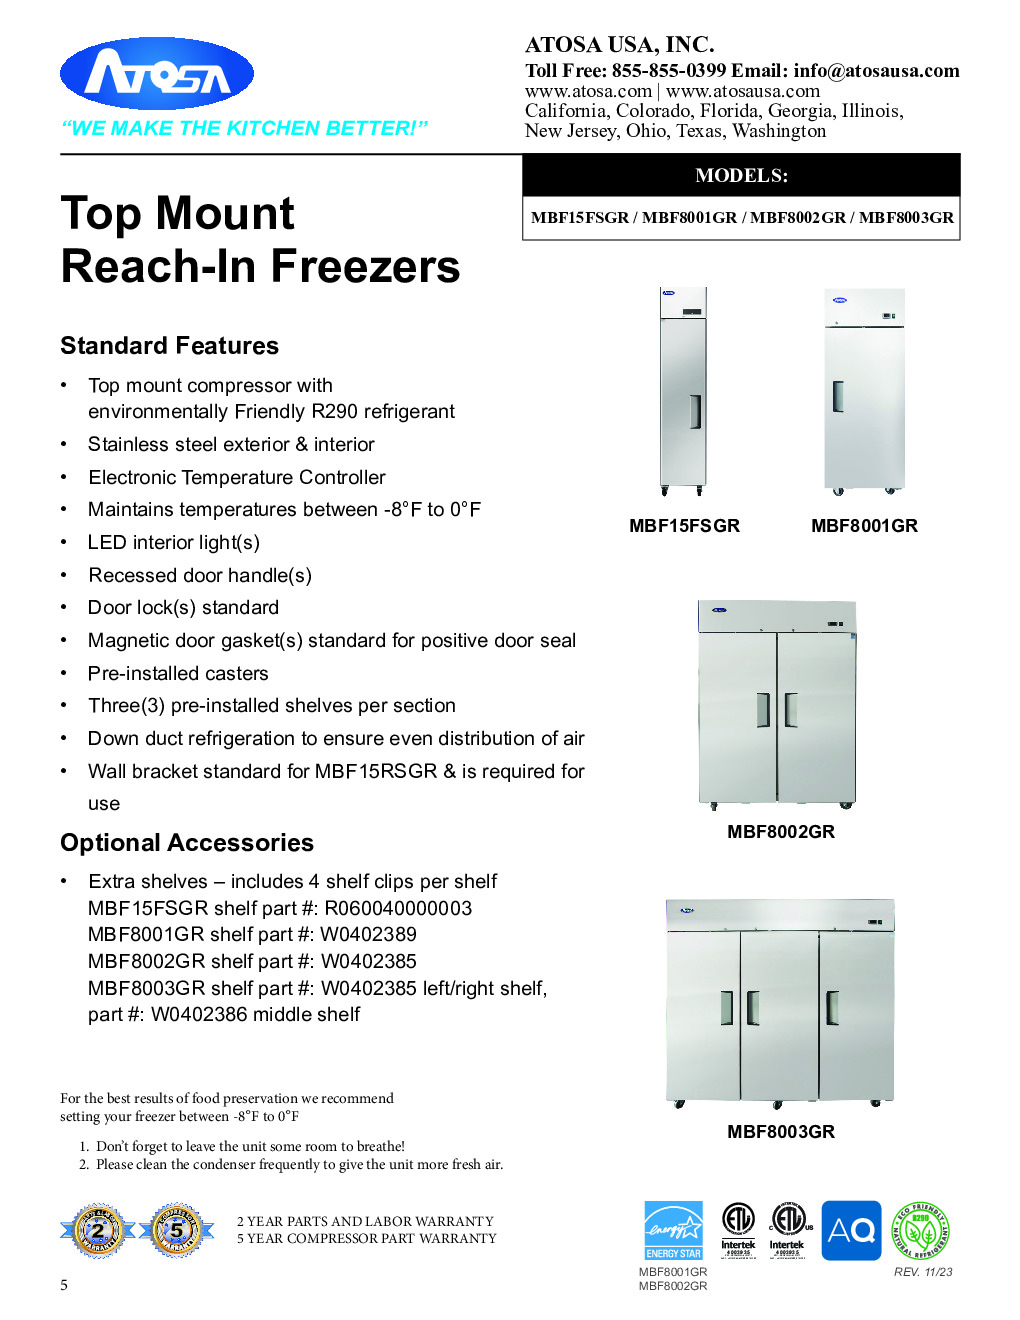 Atosa USA MBF15FSGR Reach-In Freezer